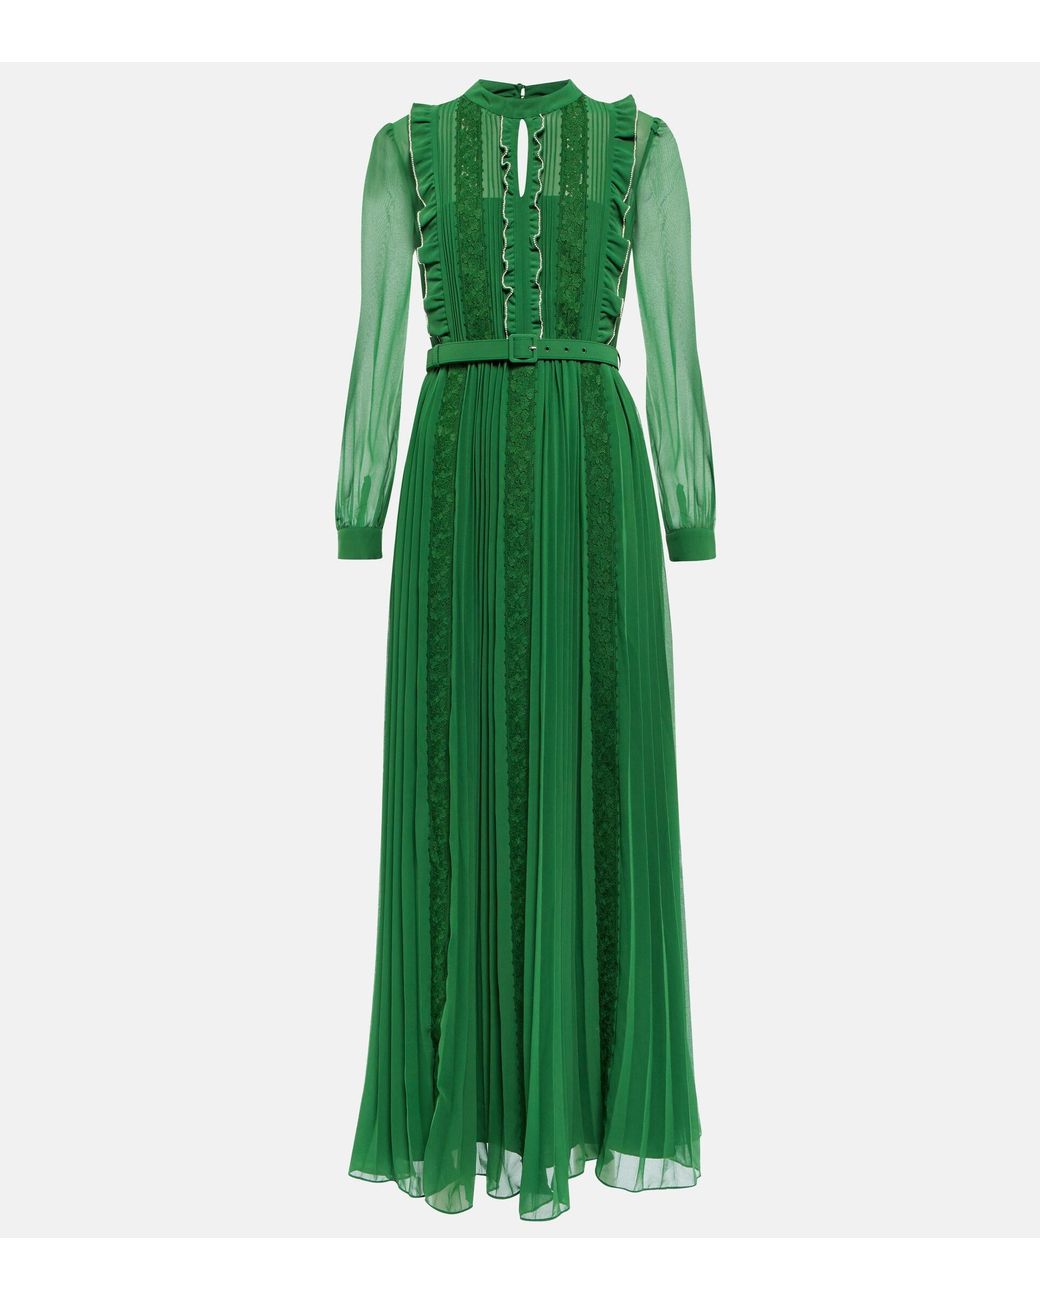 Self-Portrait Embellished Chiffon Gown in Green | Lyst